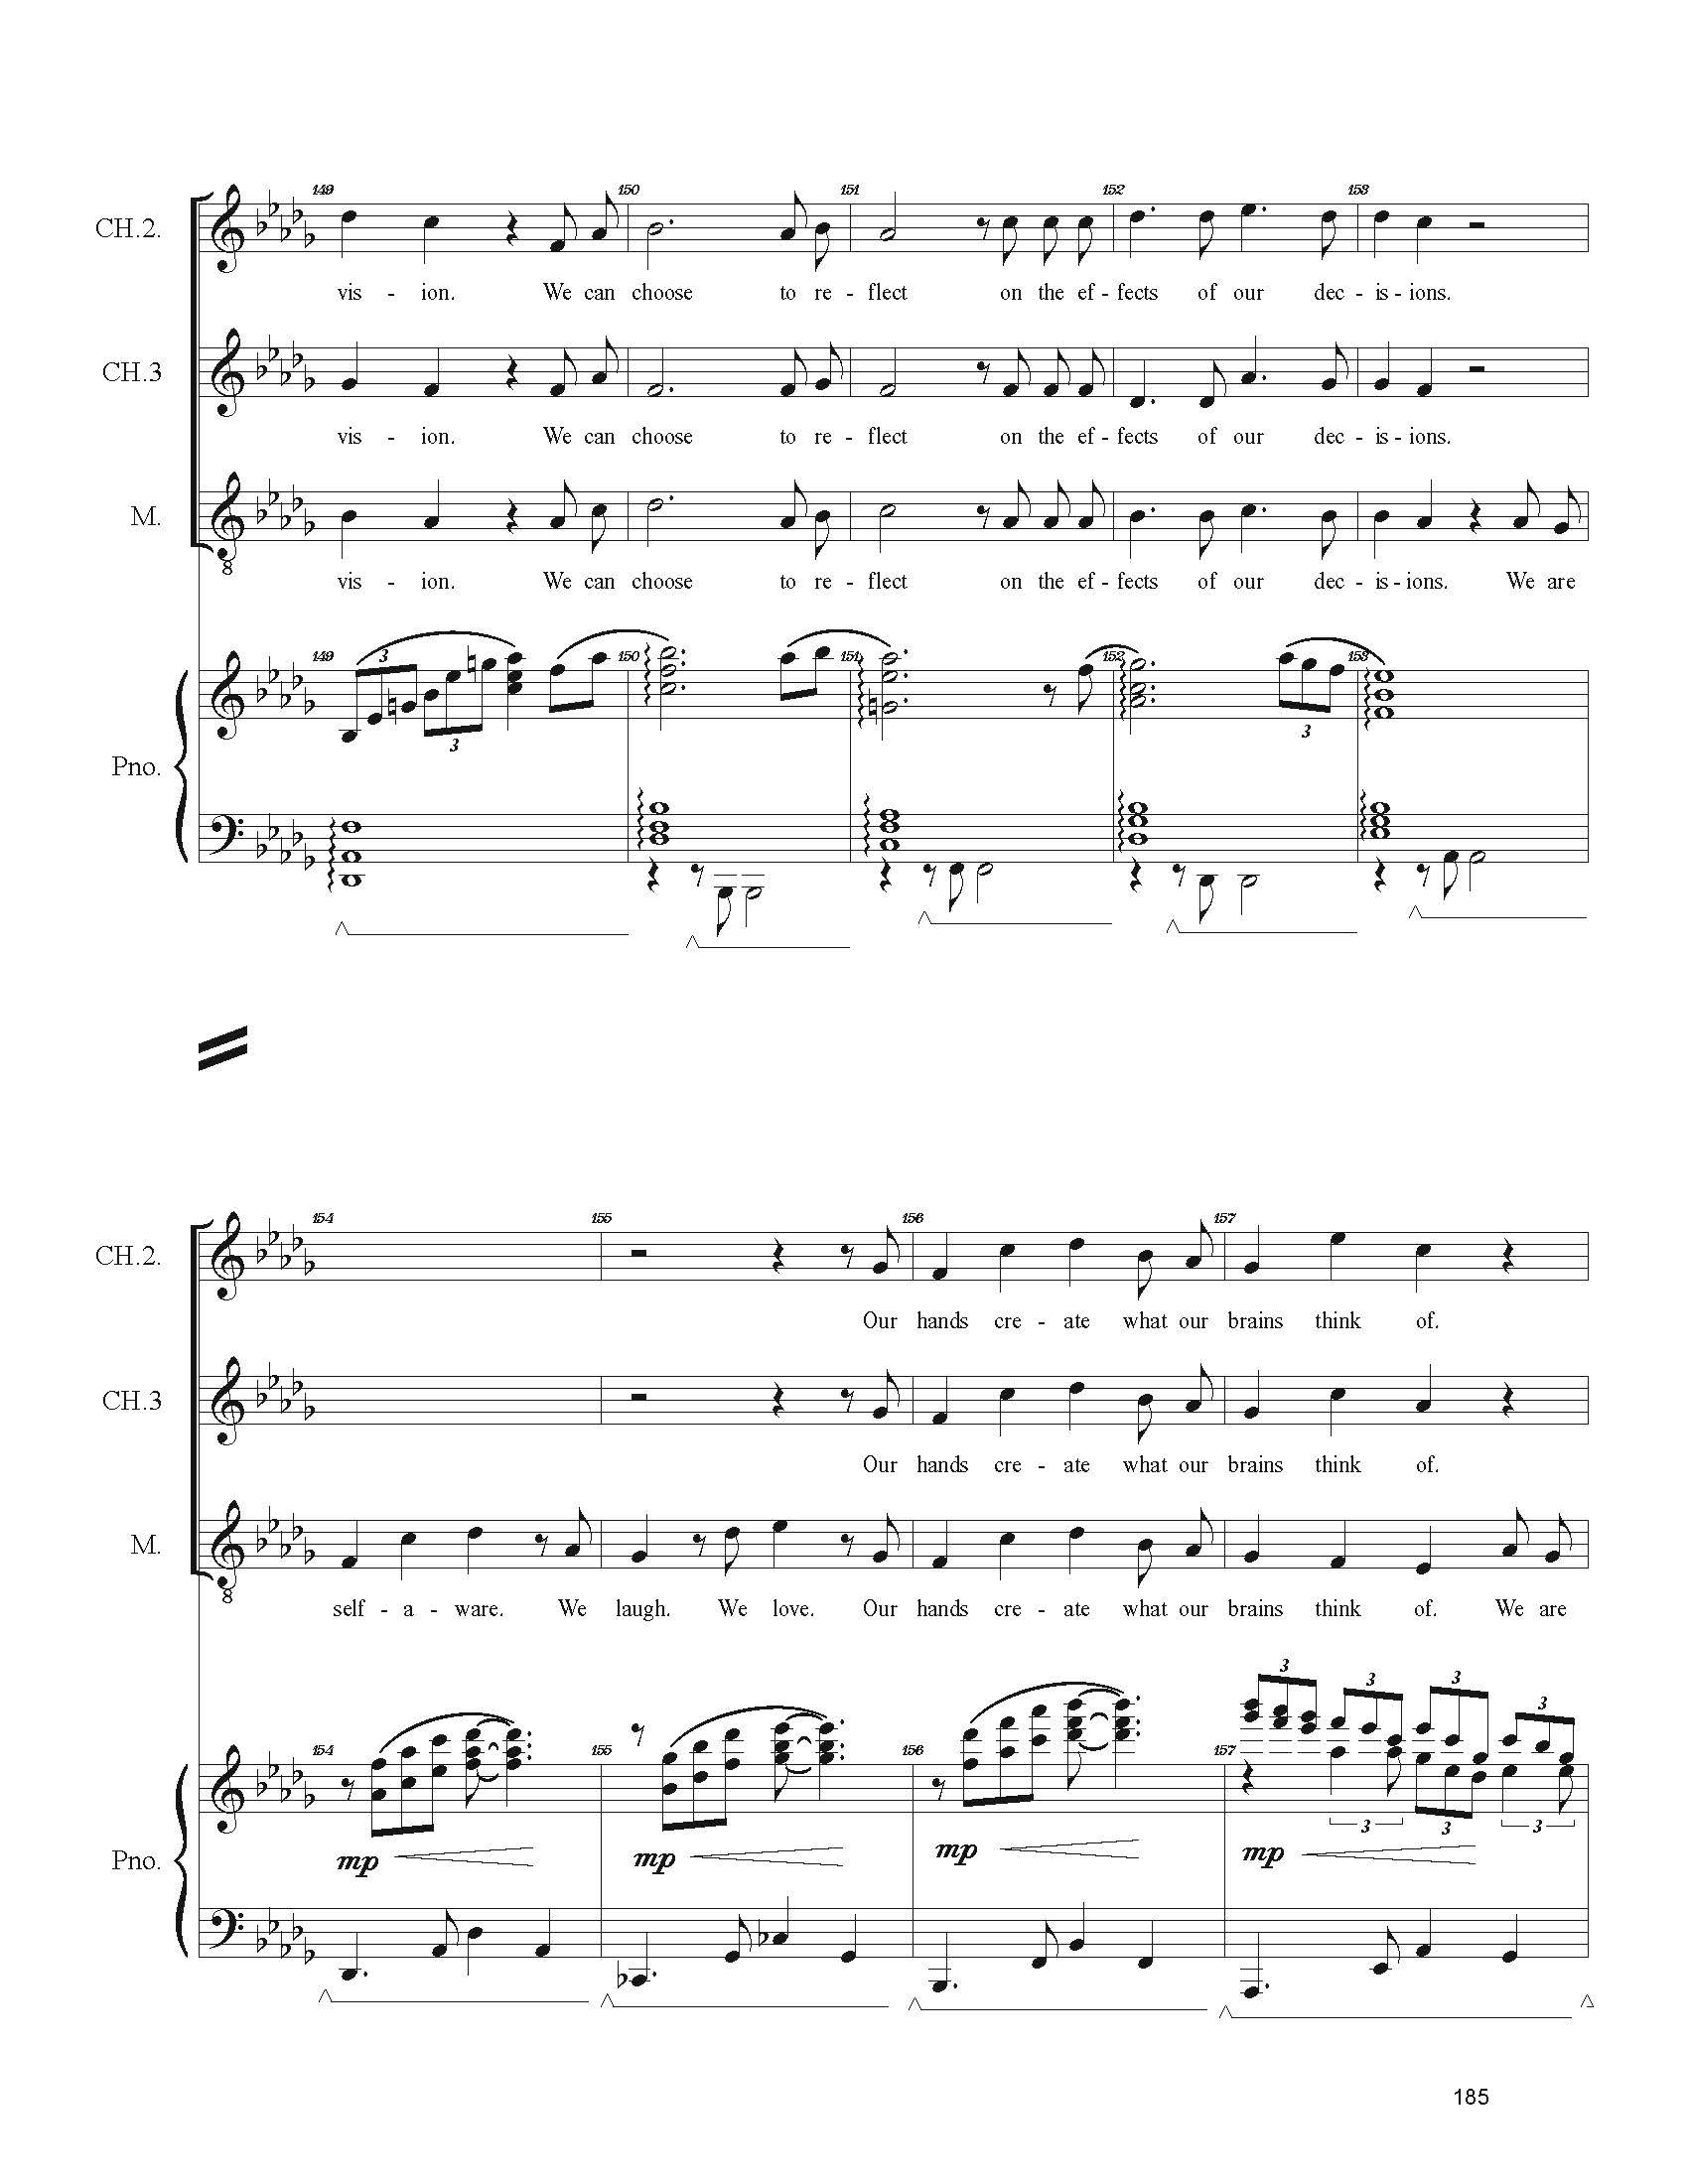 FULL PIANO VOCAL SCORE DRAFT 1 - Score_Page_185.jpg